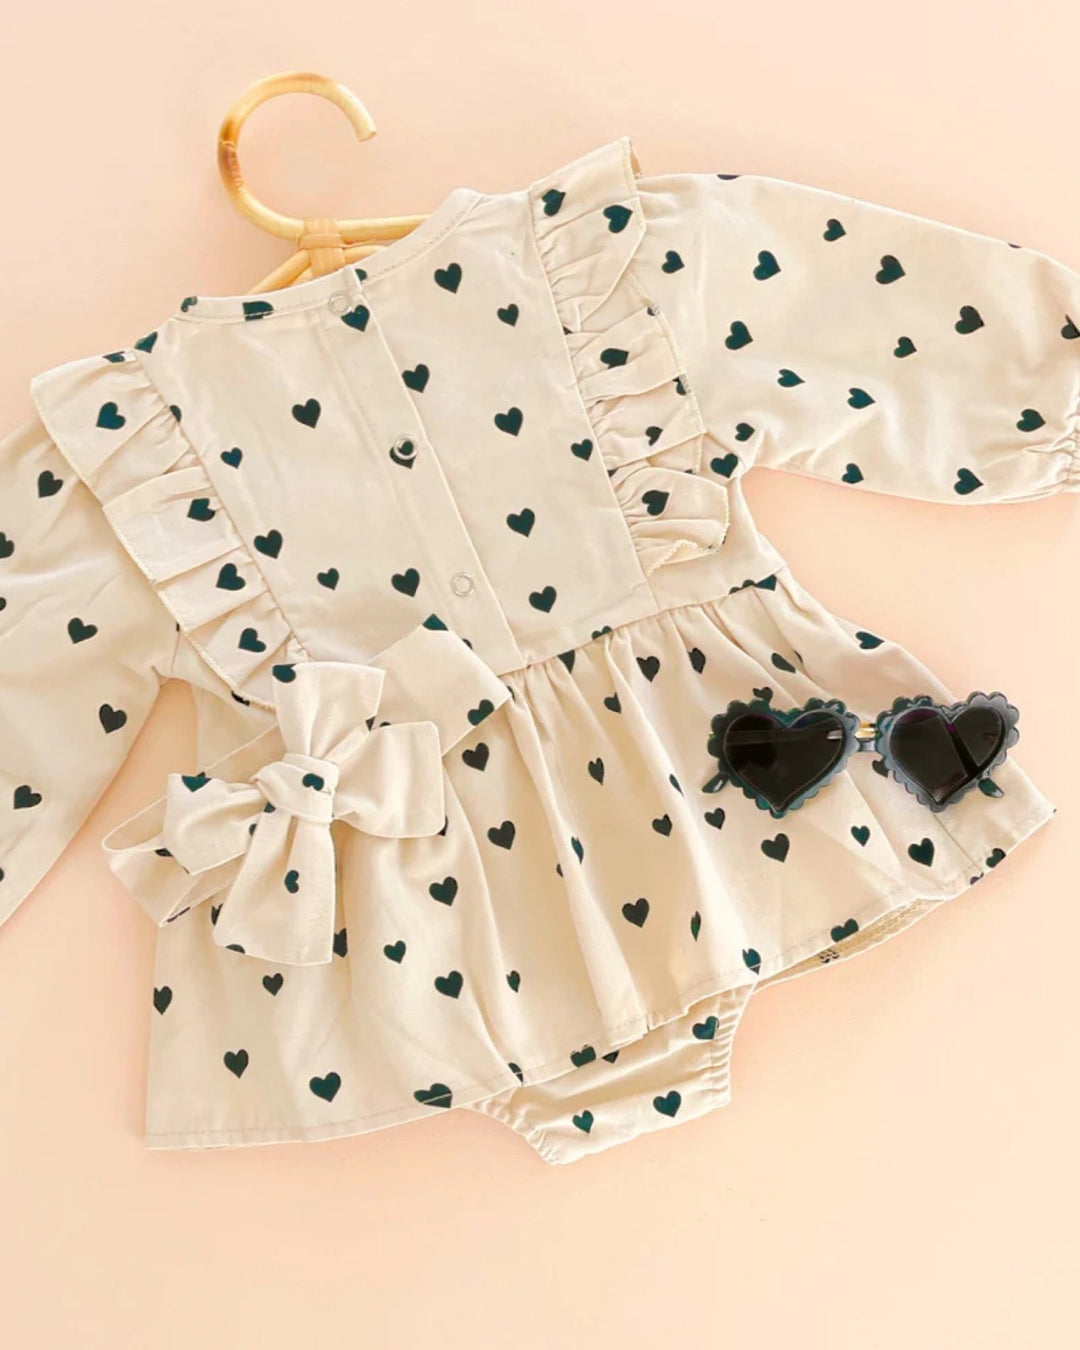 Hearts Peplum Romper Set, Oat - Baby & Toddler Outfits - LUCKY PANDA KIDS